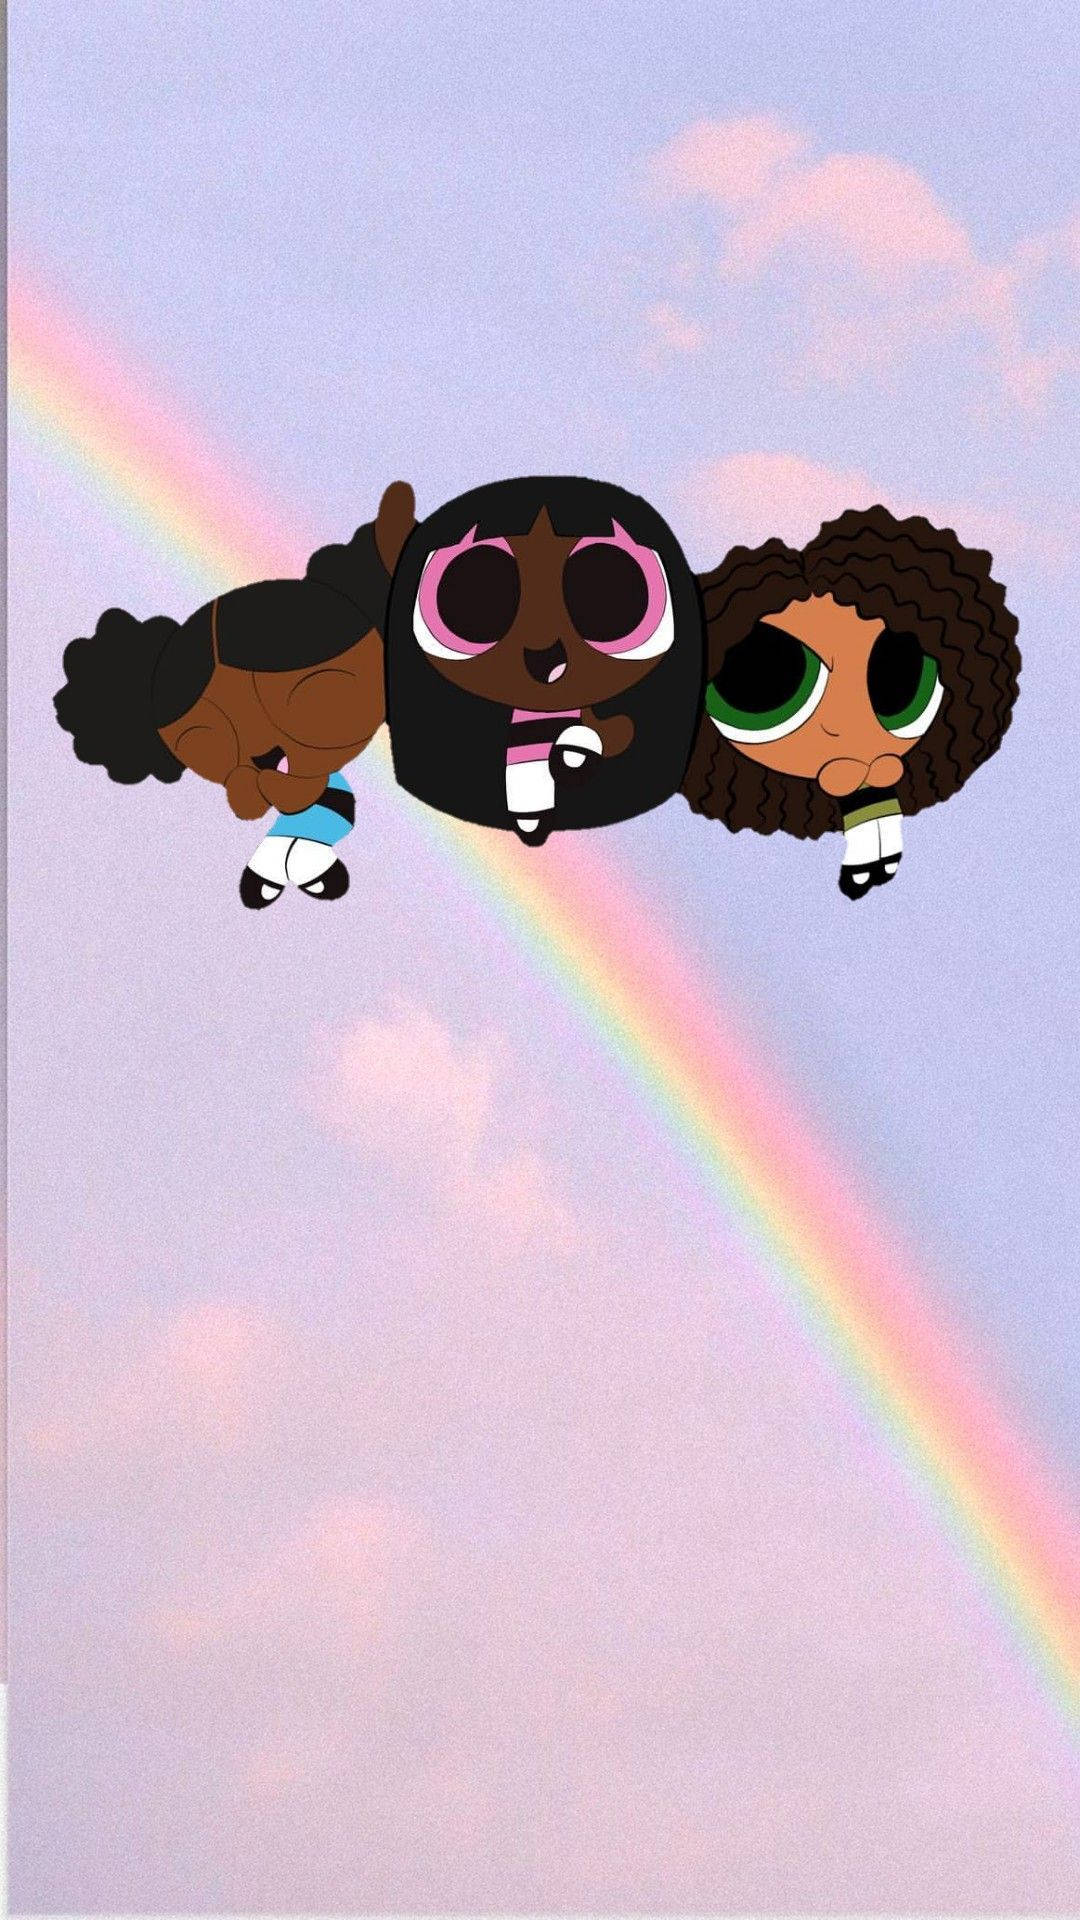 Black Powerpuff Girls With Rainbow Backdrop Wallpaper